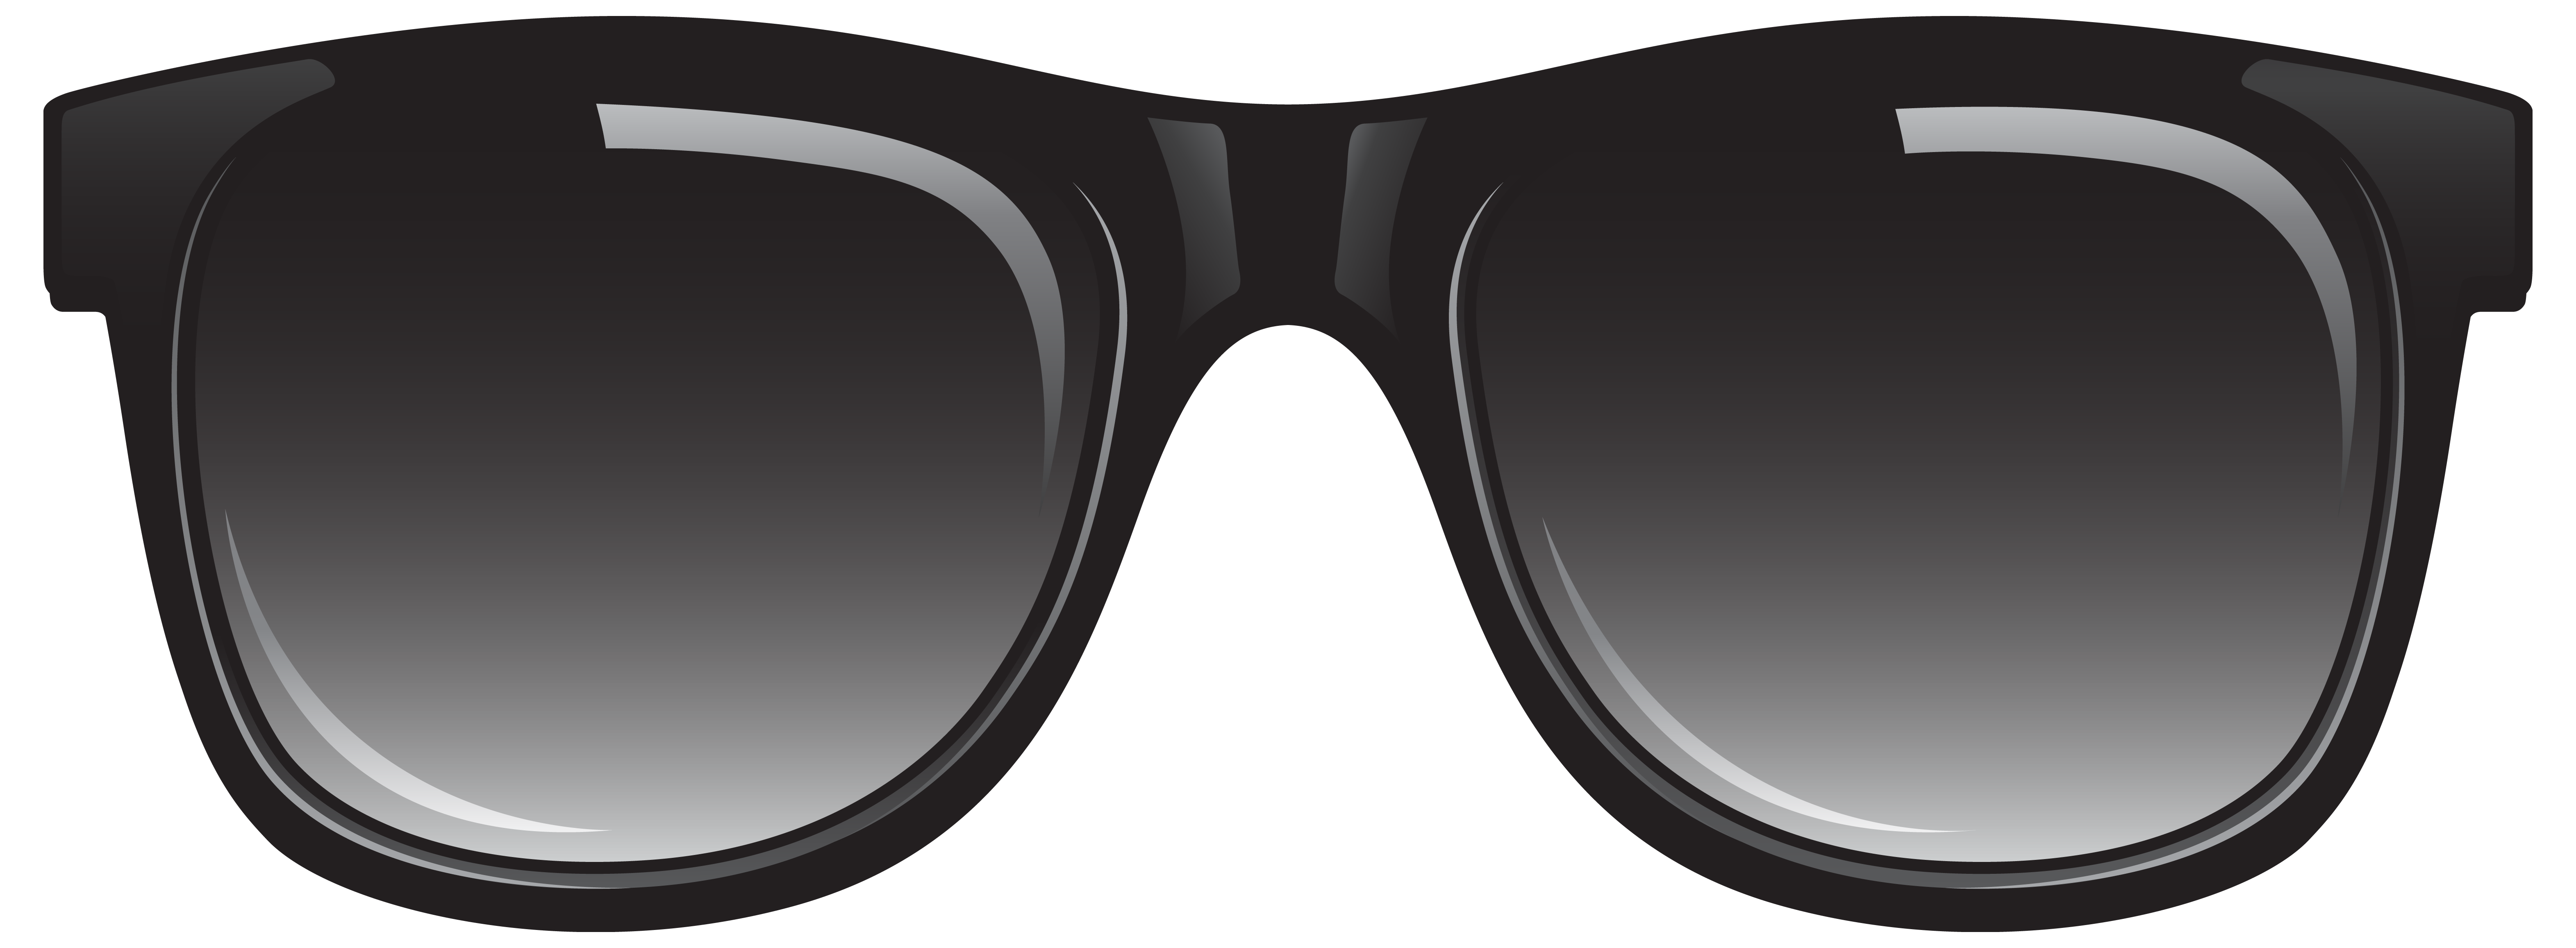 Sunglasses Vector Free